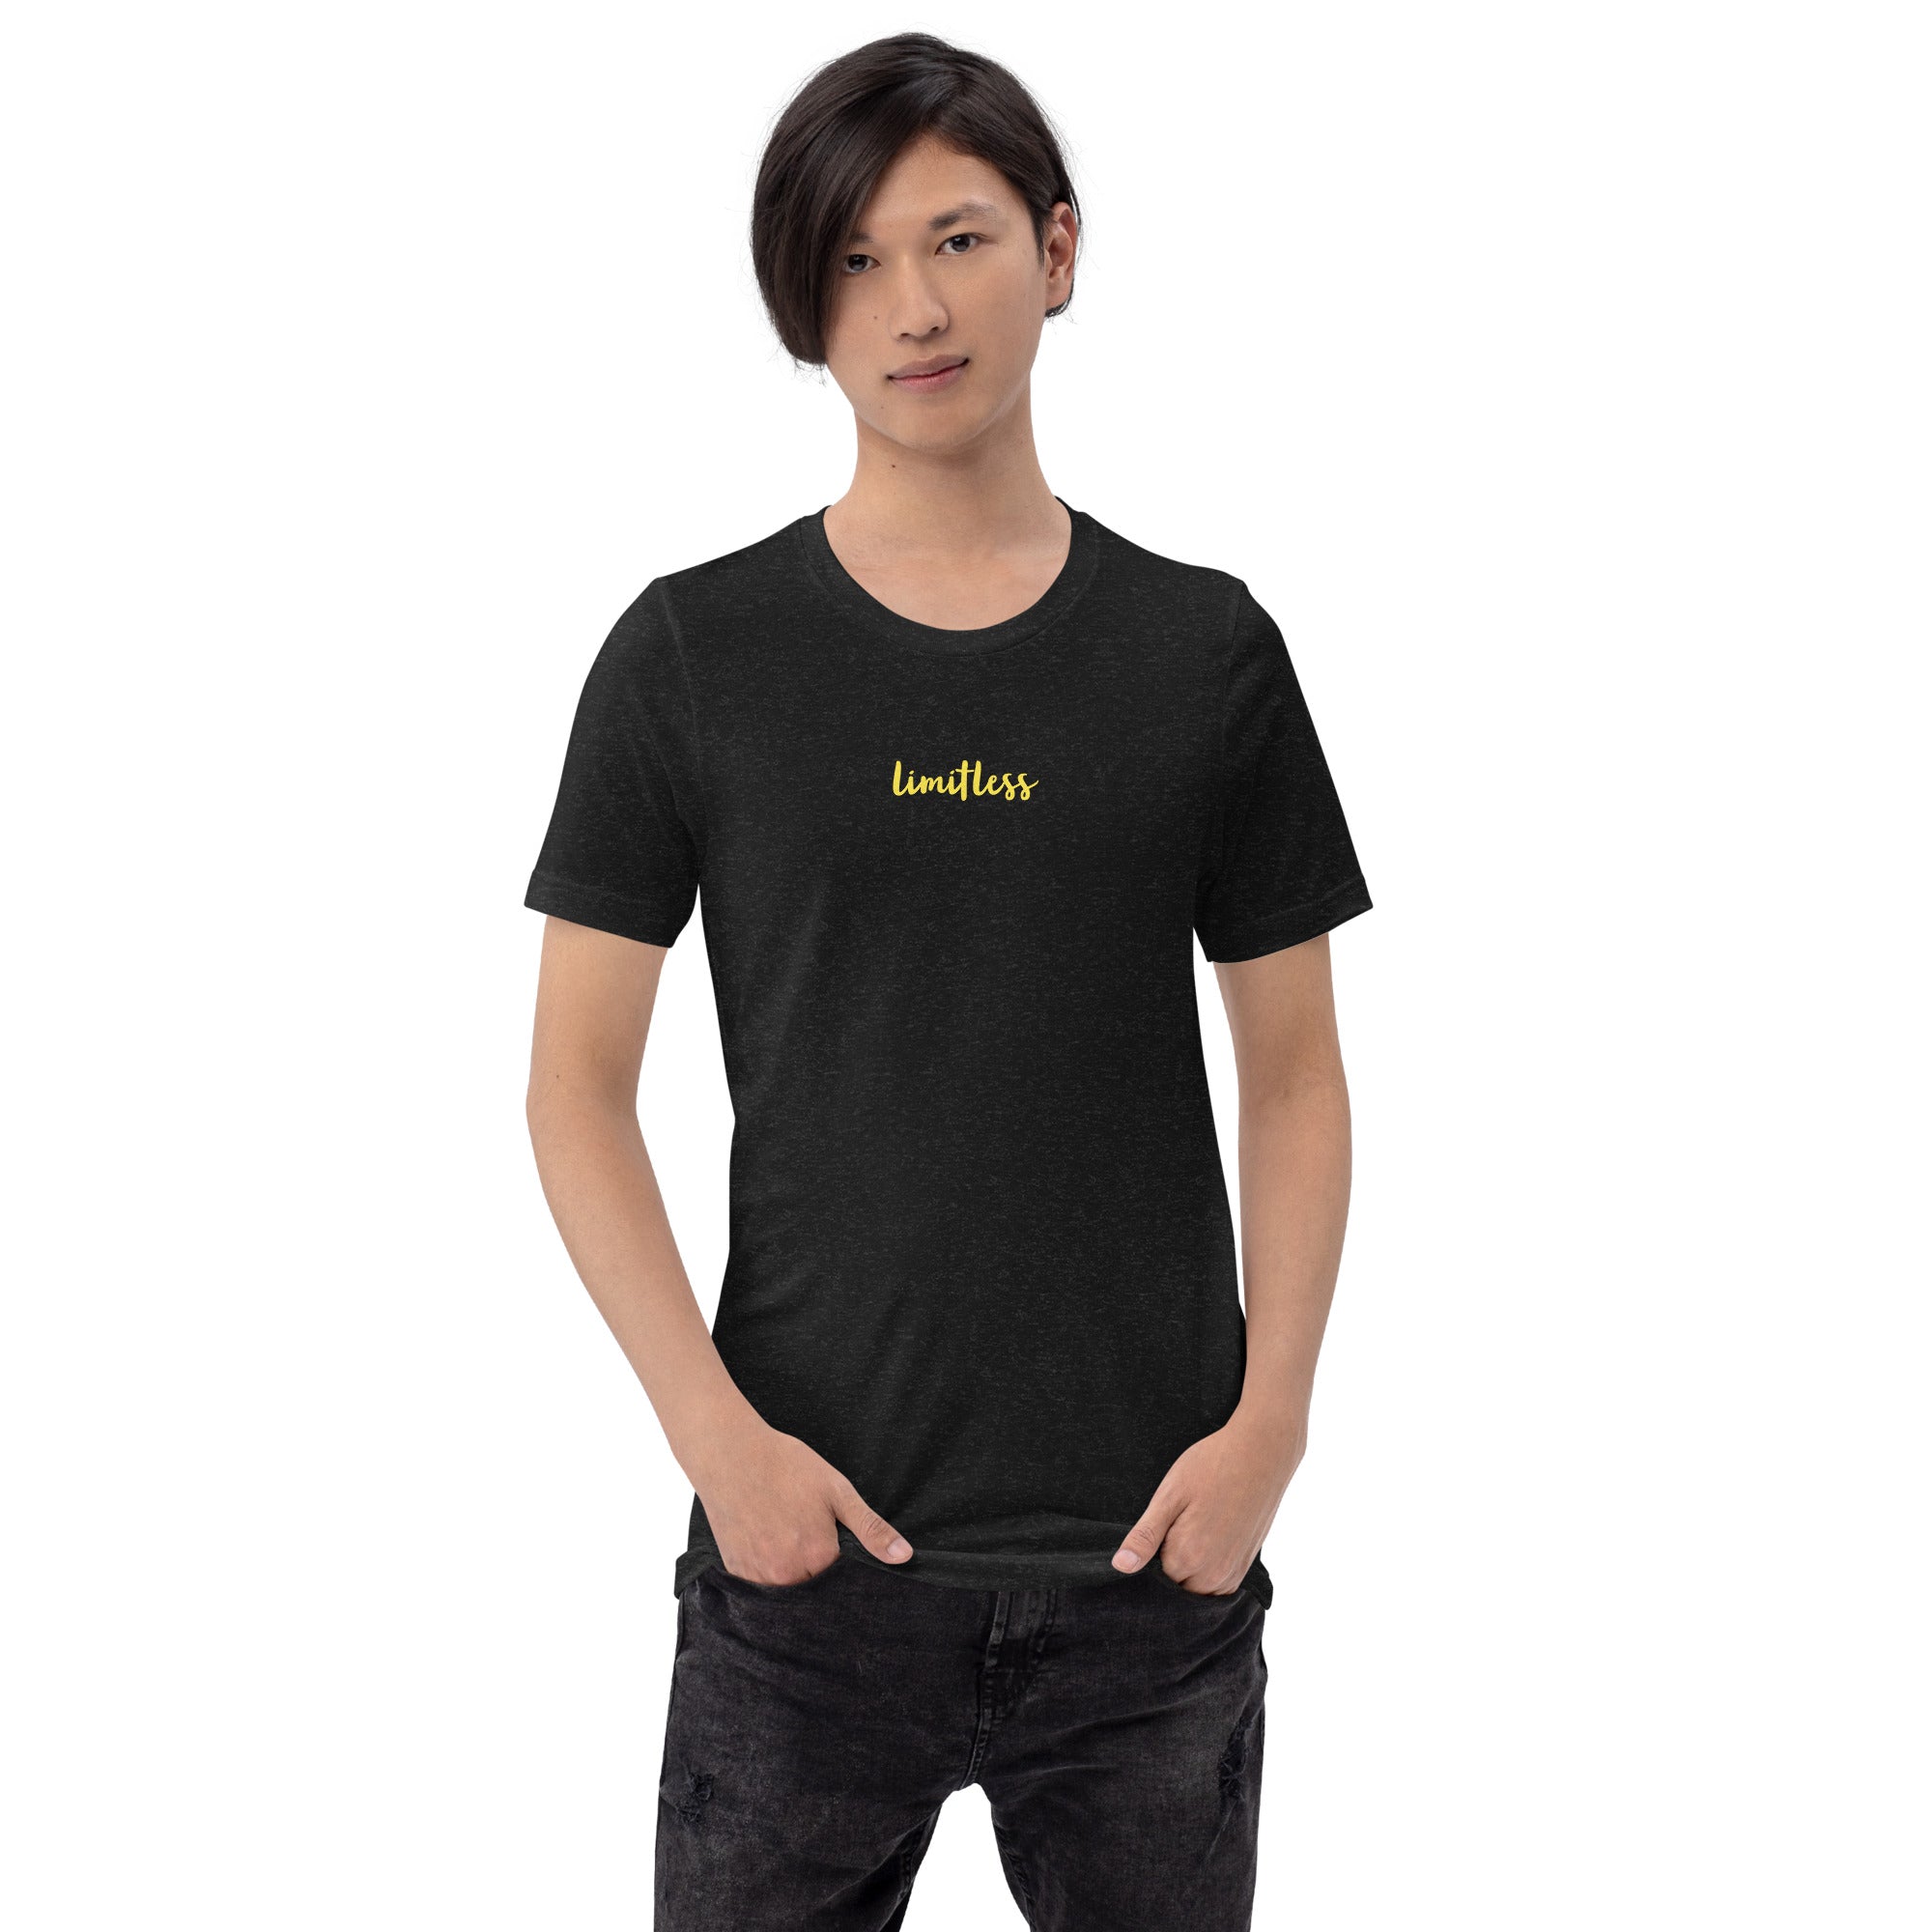 I am Limitless Premium Short-Sleeve Unisex T-Shirt | Positive Affirmation Tee